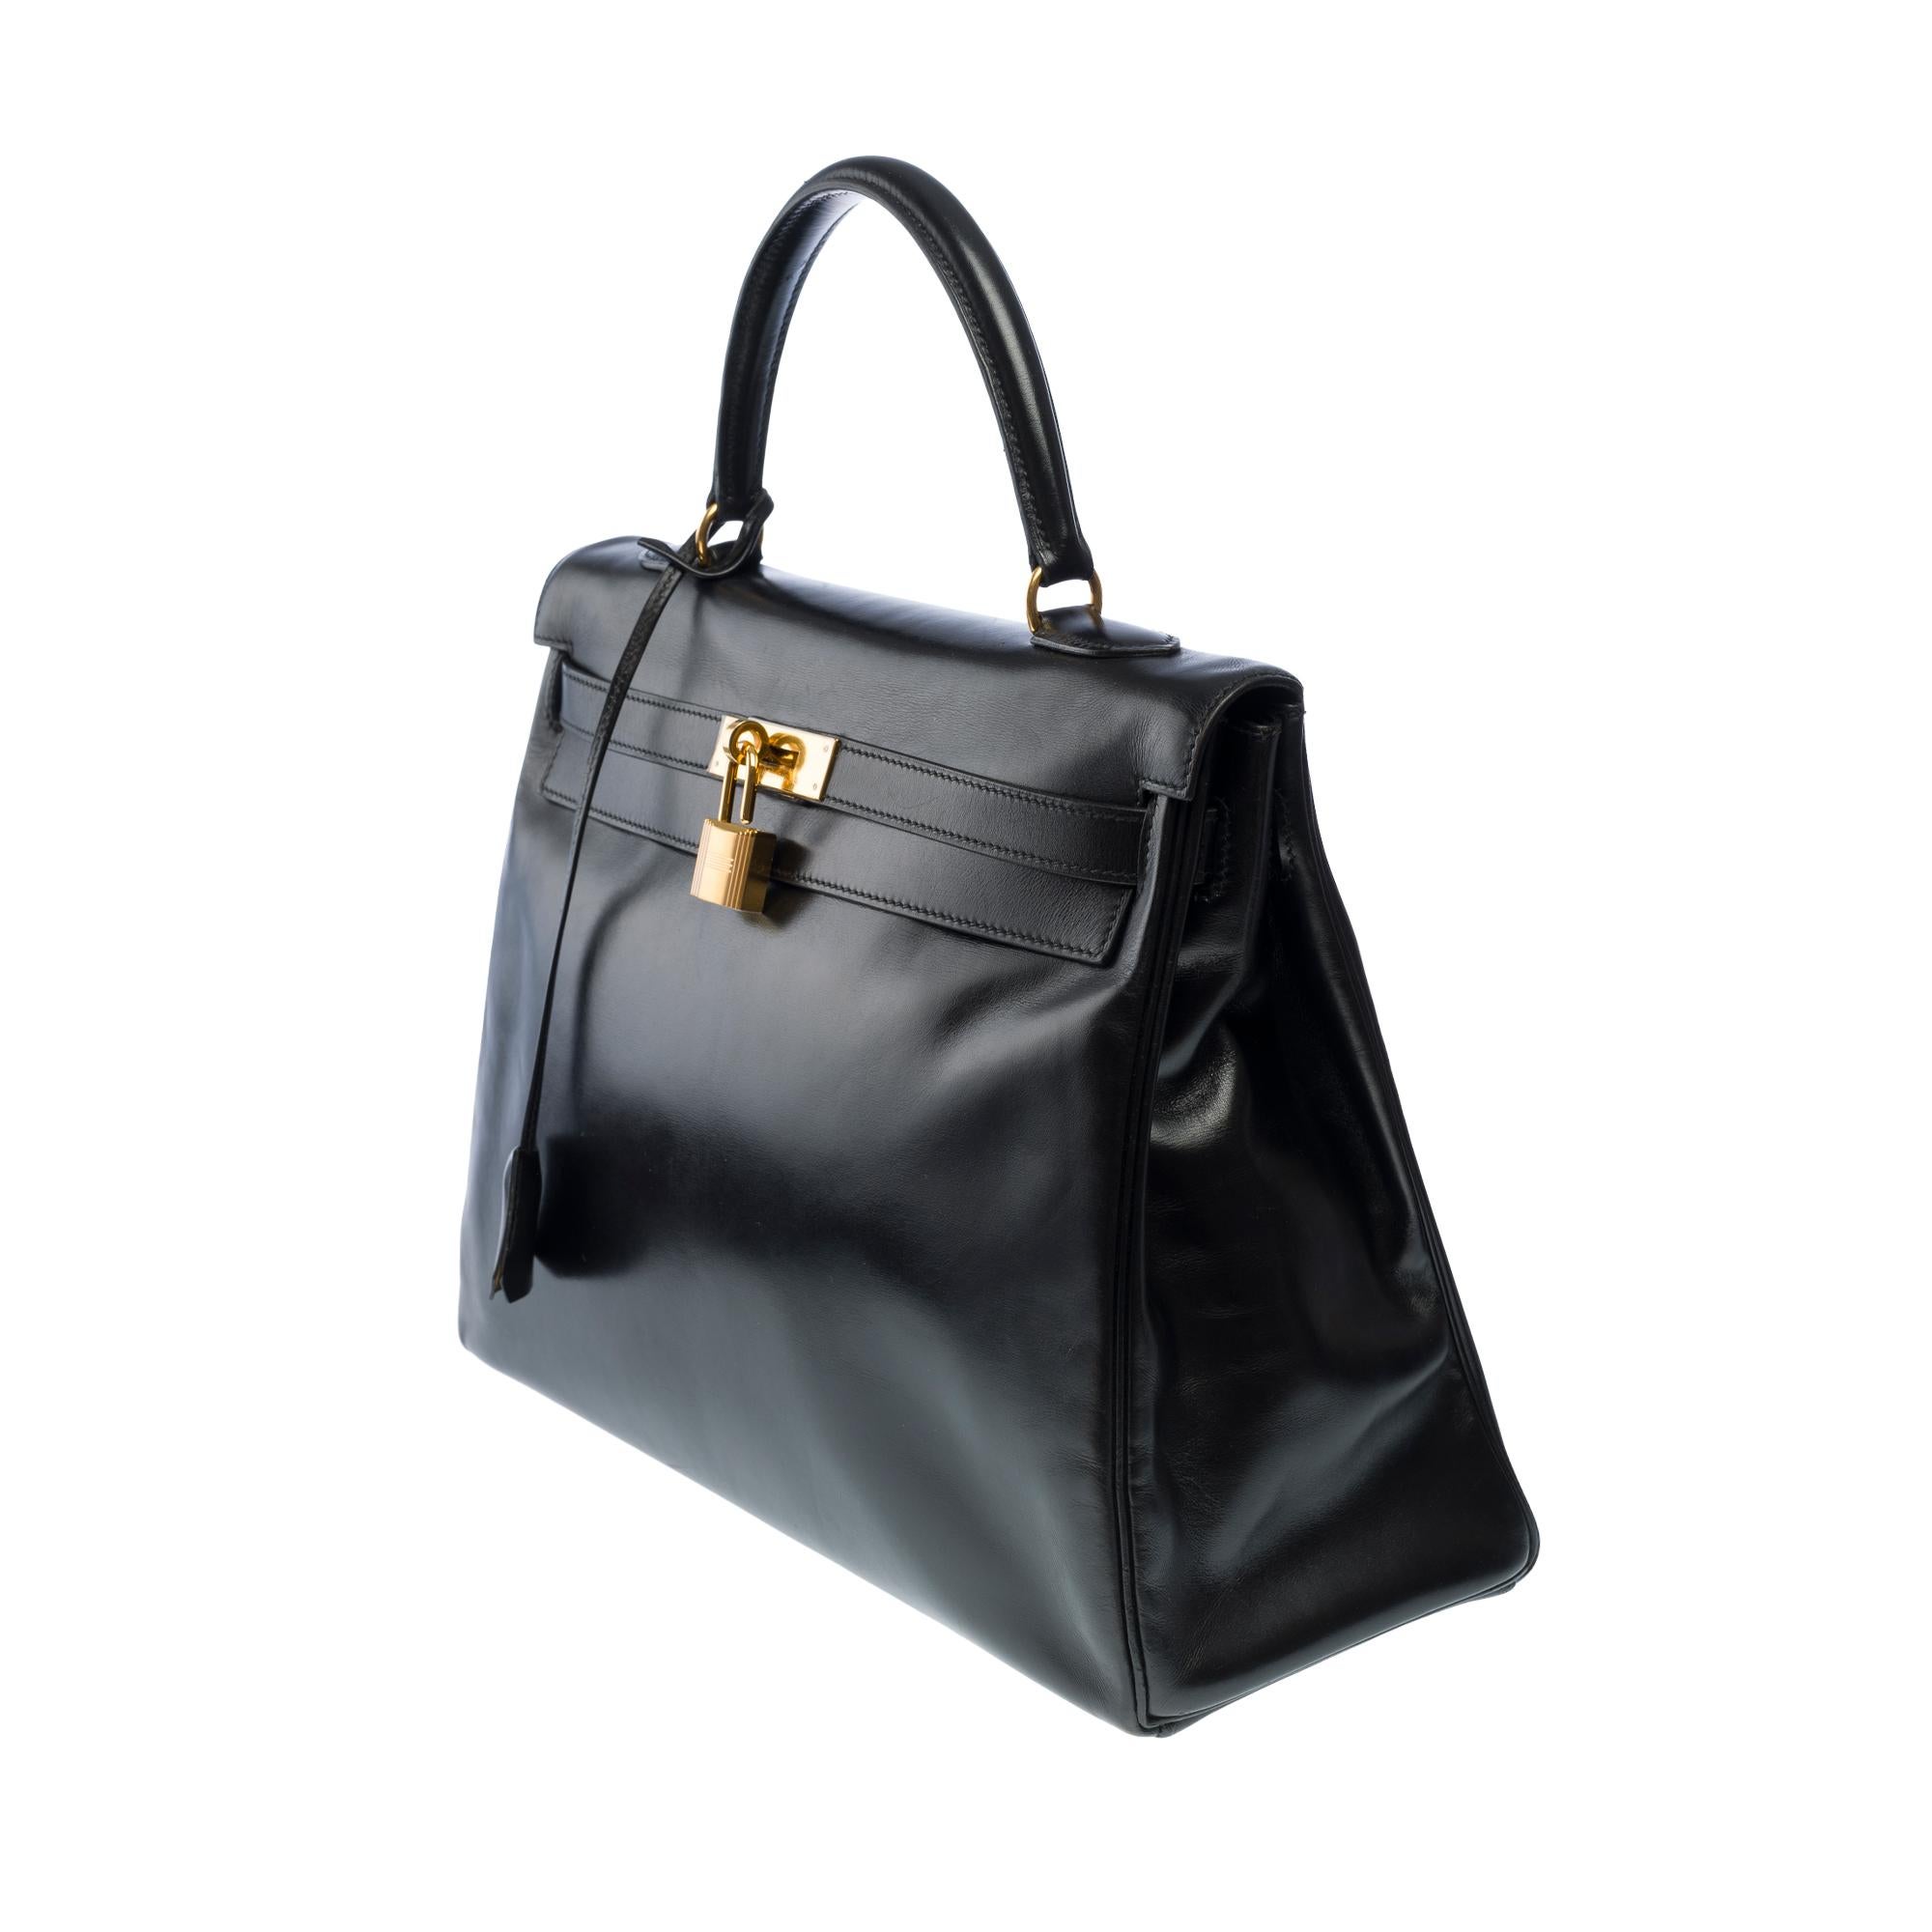 Hermès Kelly 35 retourne handbag strap in black box calfskin leather, GHW 2